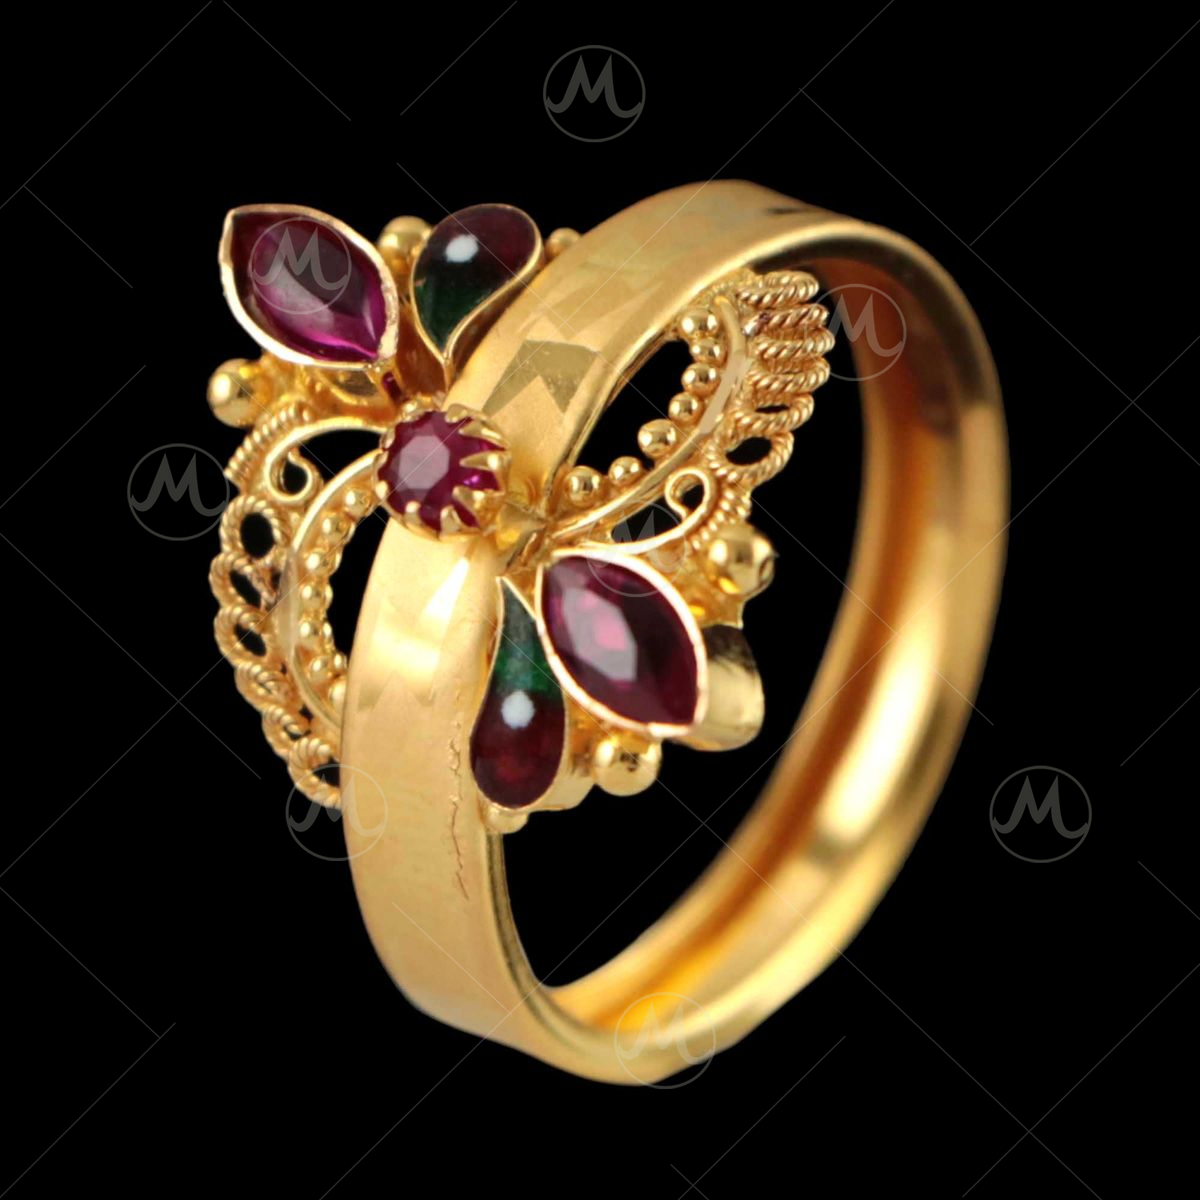 Buy quality 18 KT Hallmark Yellow Gold Fancy Ring in Mumbai